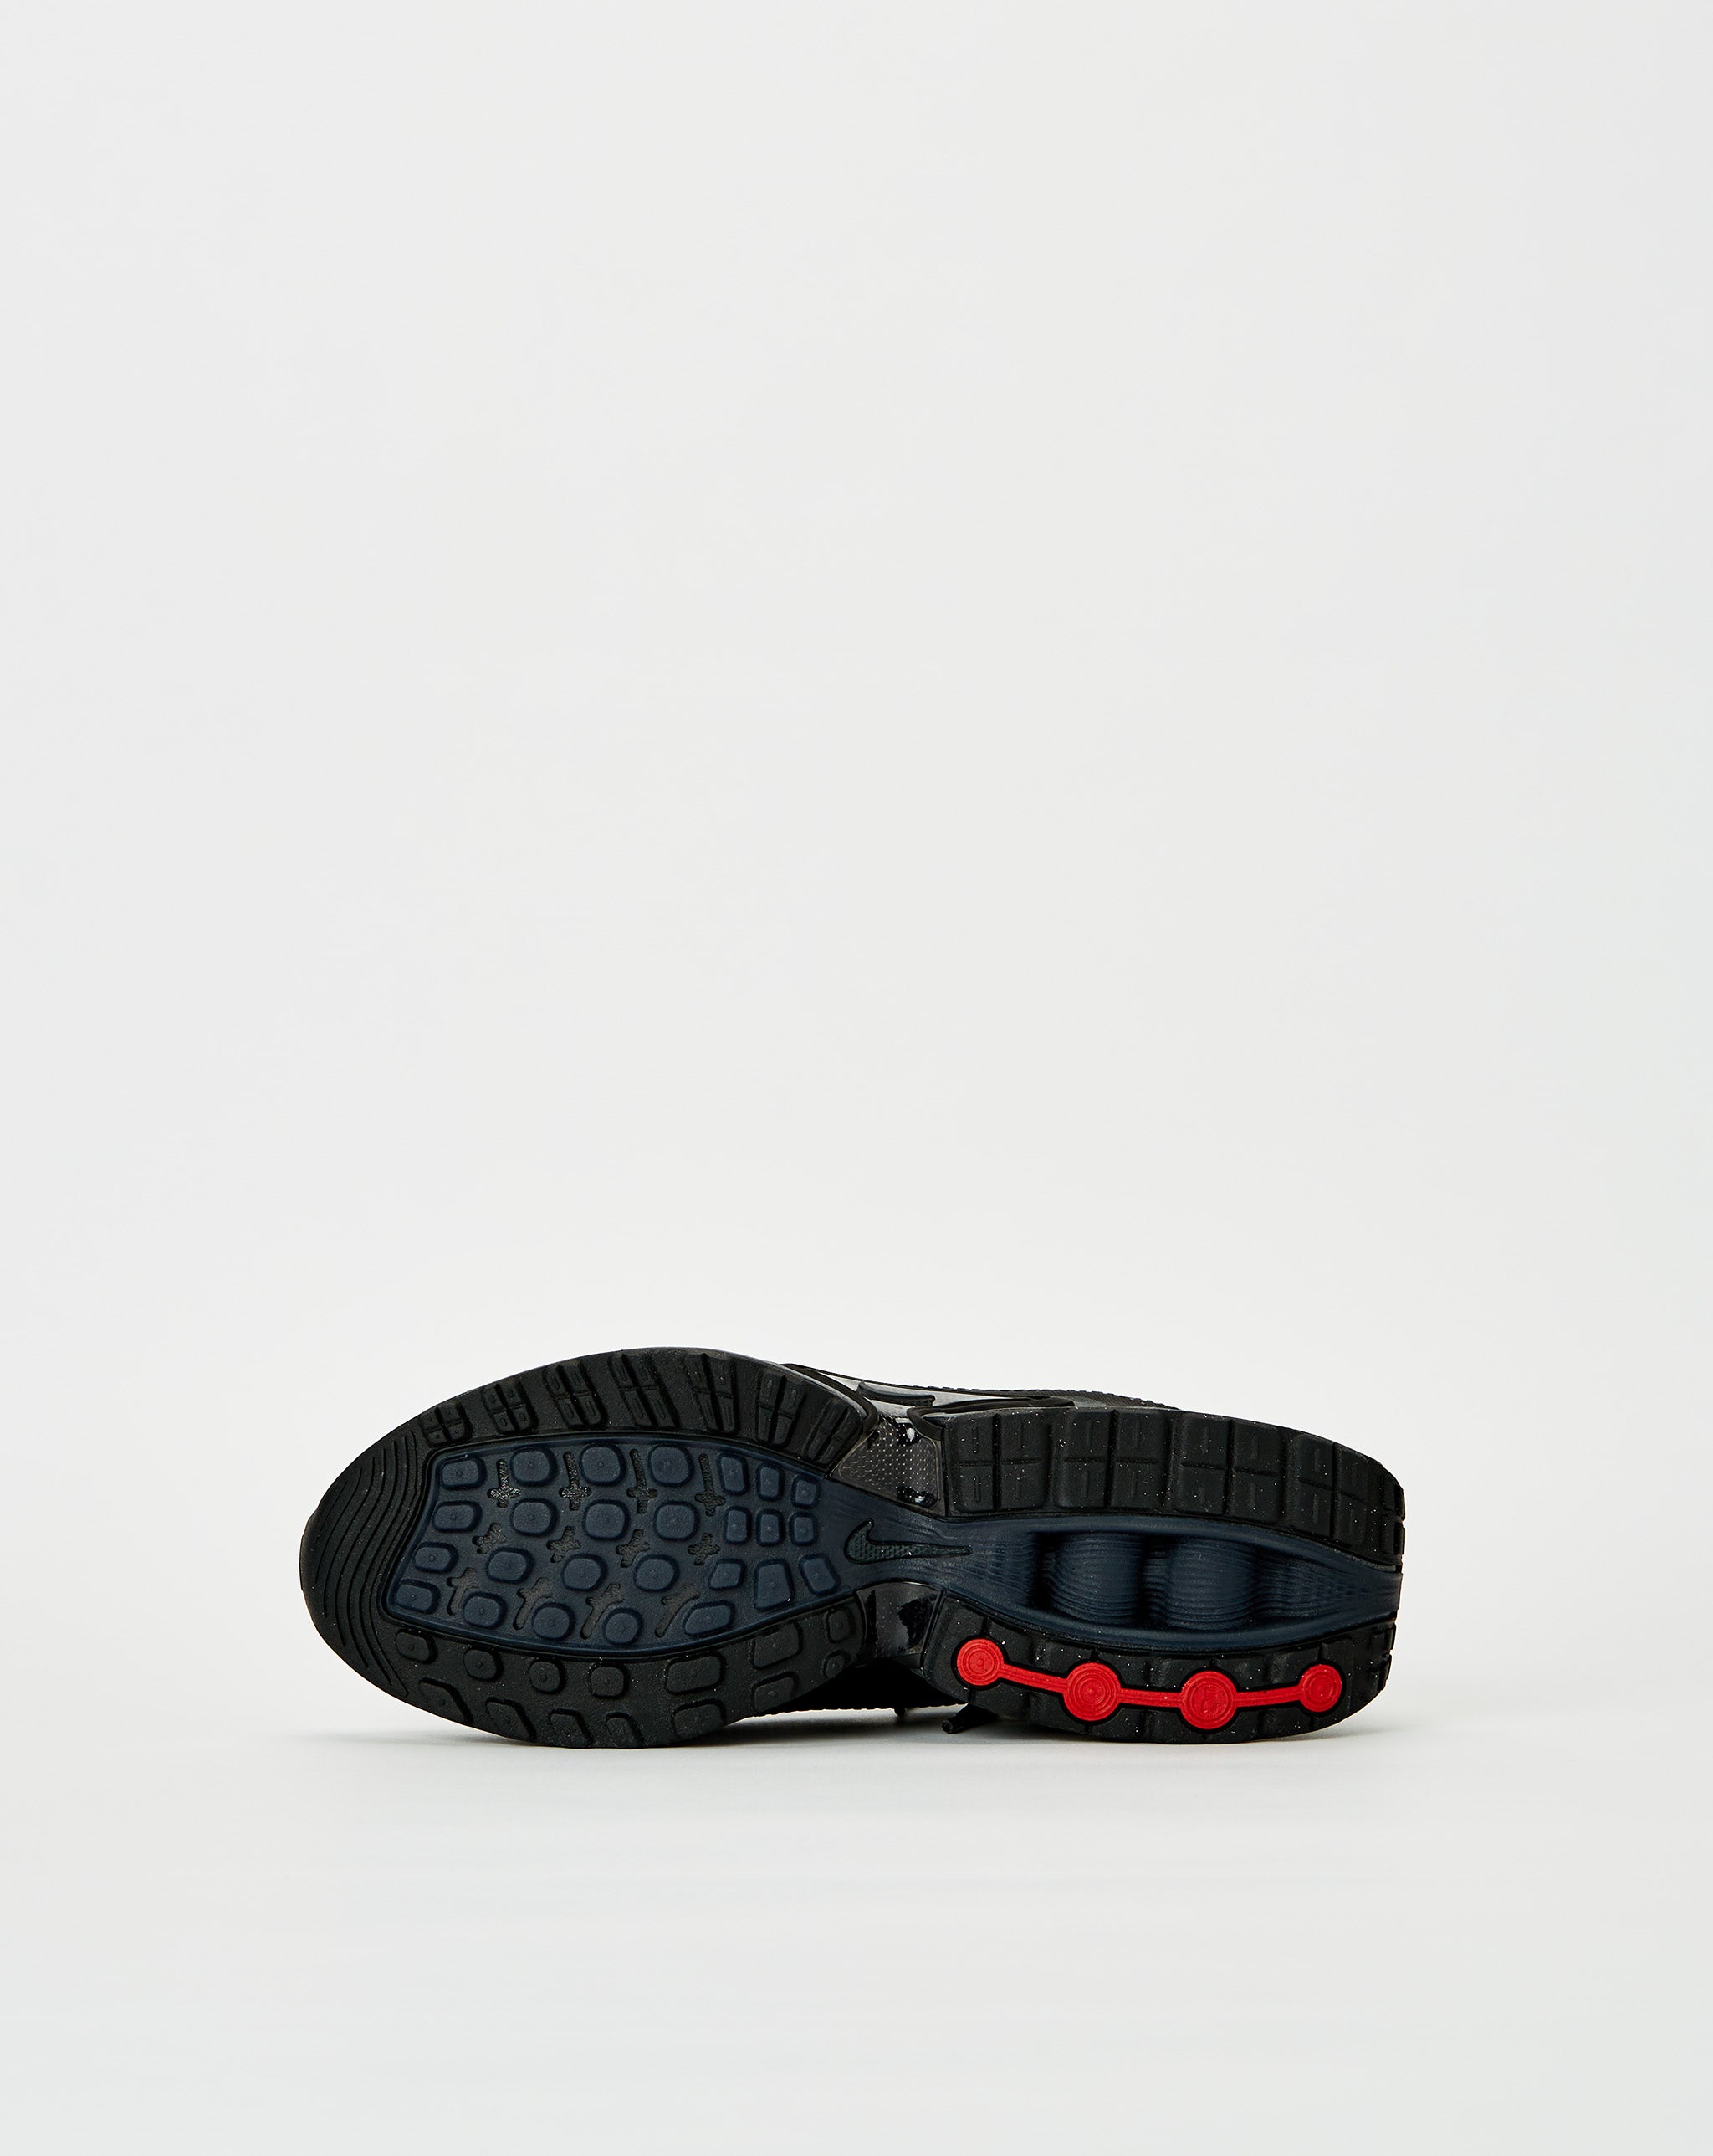 Nike nike acg boots mens foot locker r storage  - Cheap Erlebniswelt-fliegenfischen Jordan outlet